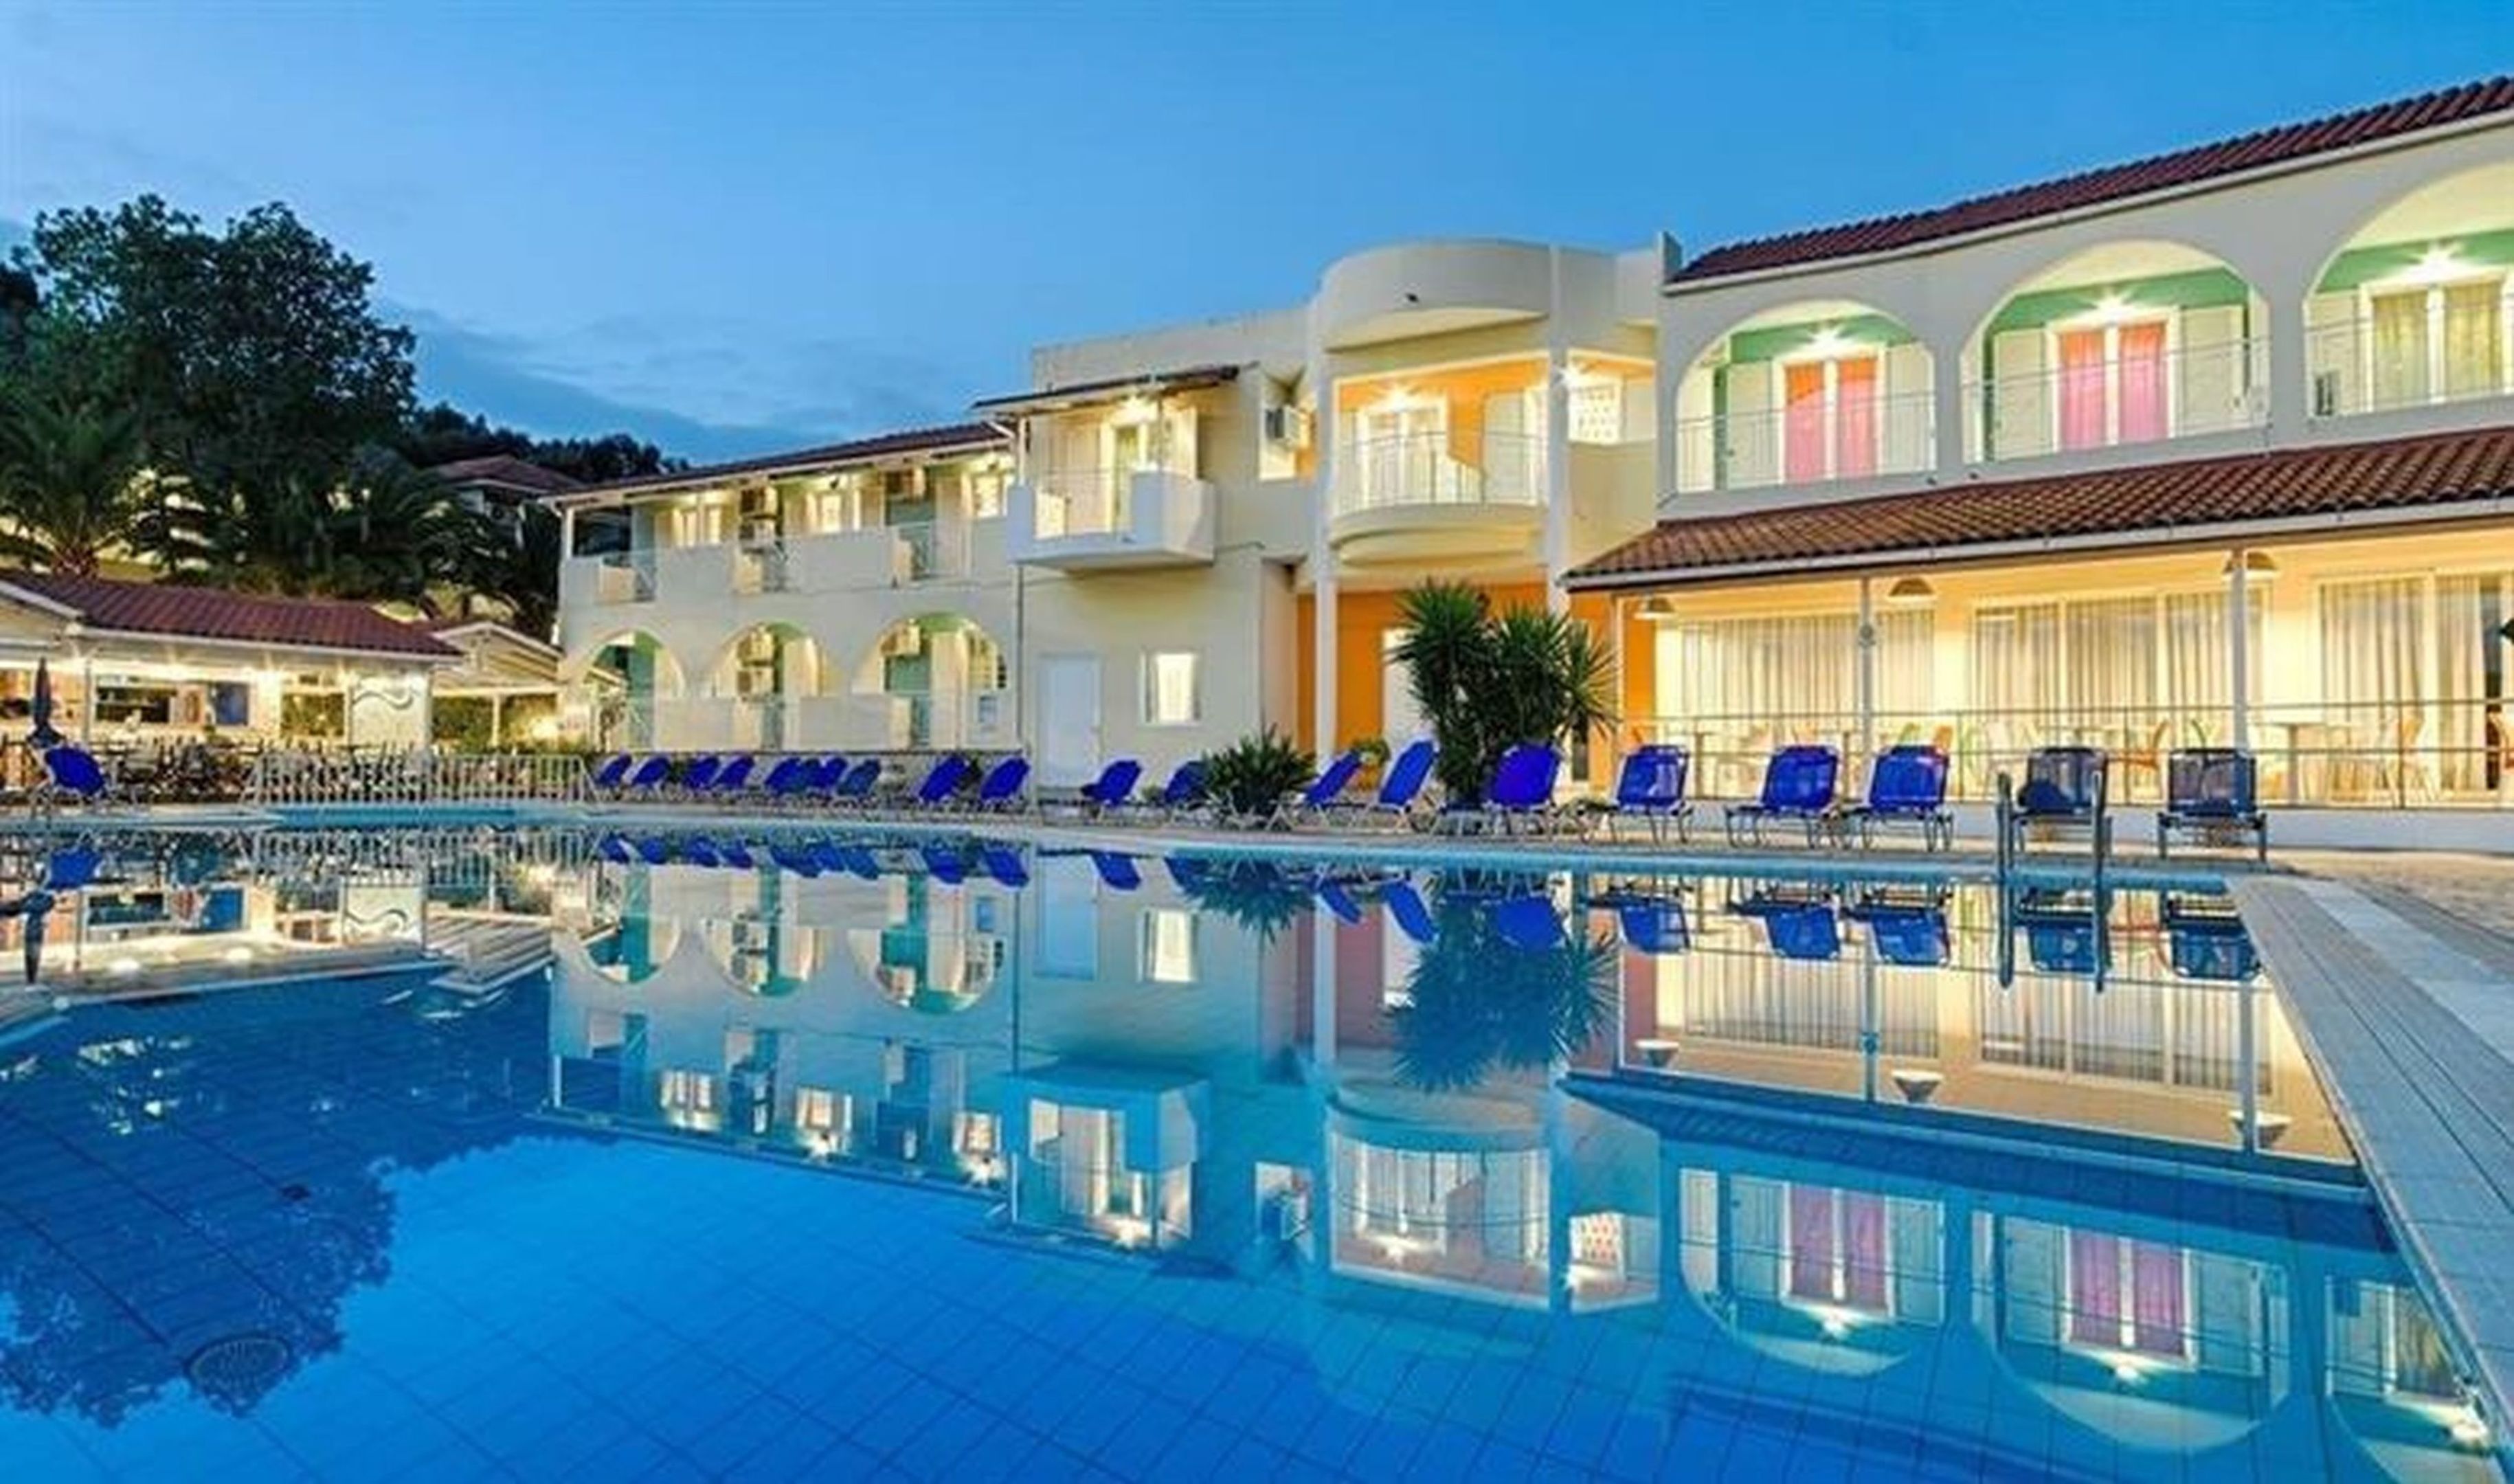 Sunrise Zante Hotel, Tsilivi, Zakynthos, Griekenland